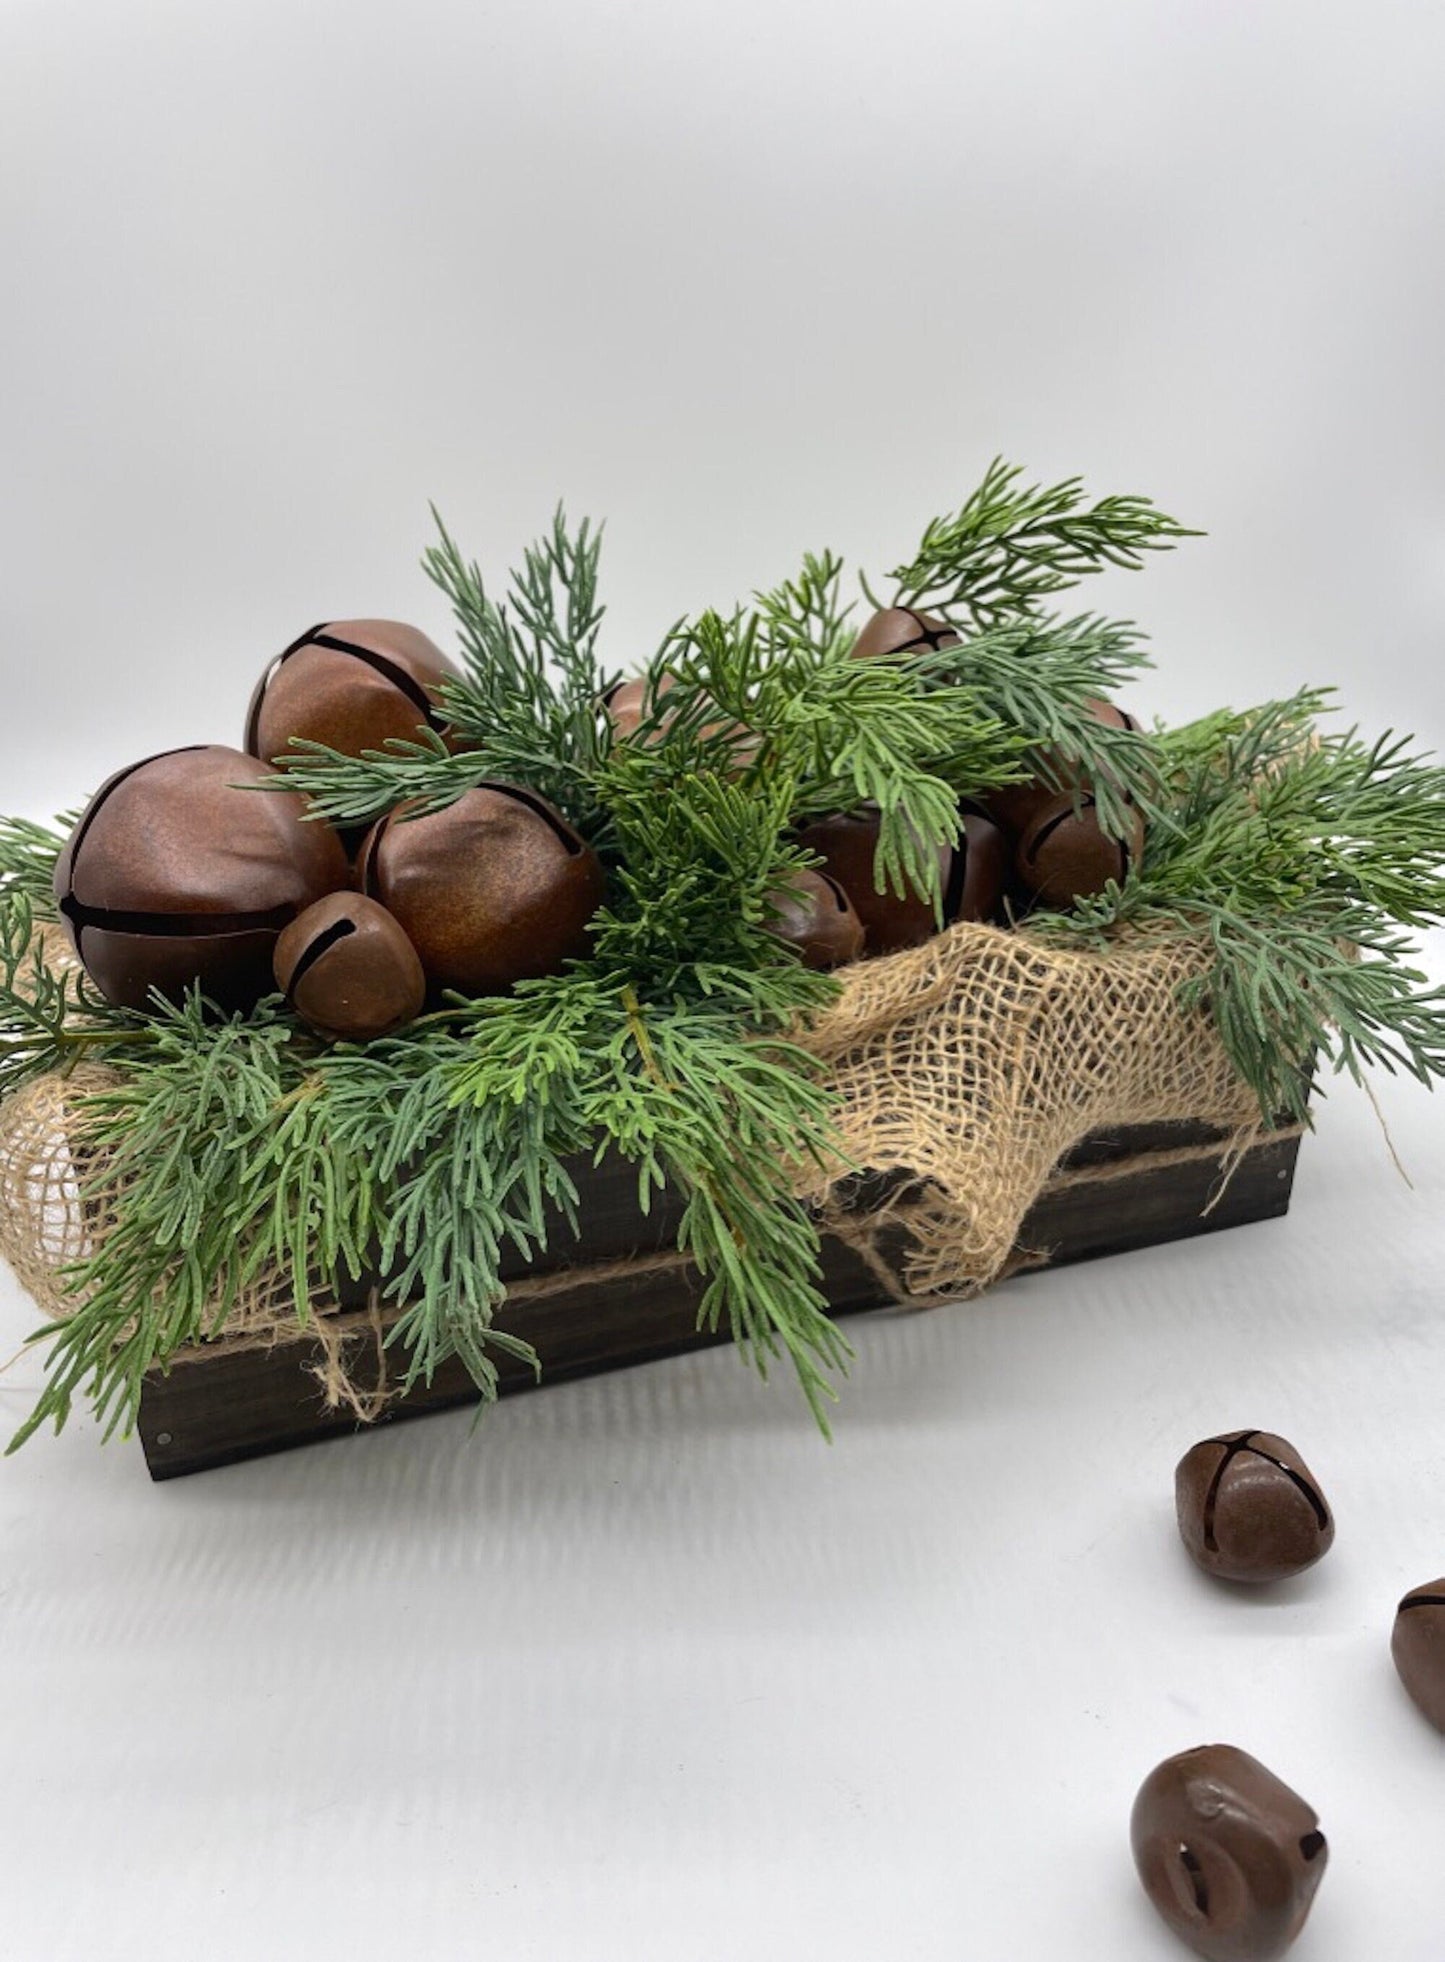 Rustic Christmas Centerpiece, Winter Arrangement with Metal Bells, Holiday Decor